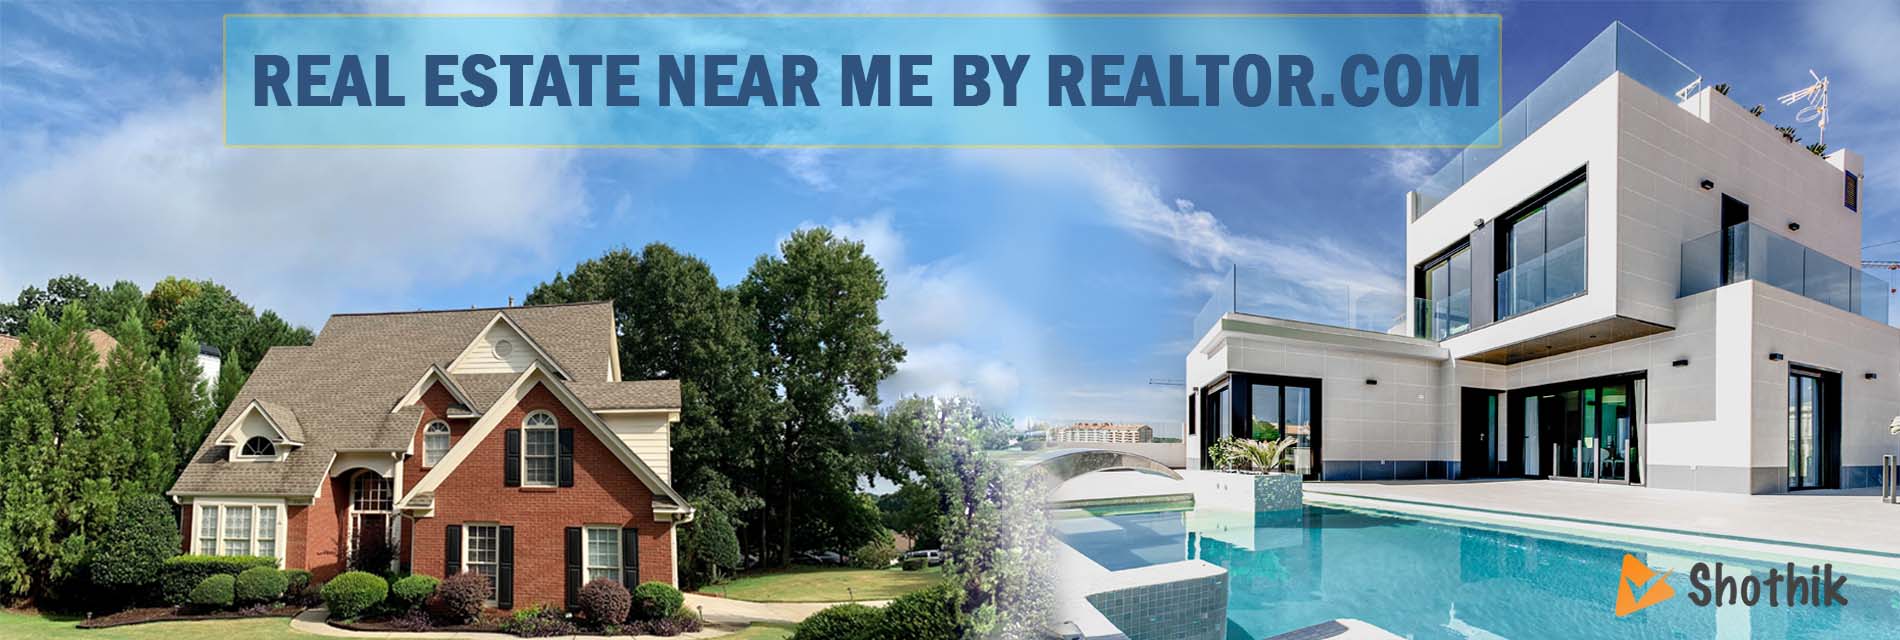 Real Estate near me by realtor.com â€“ Shothik